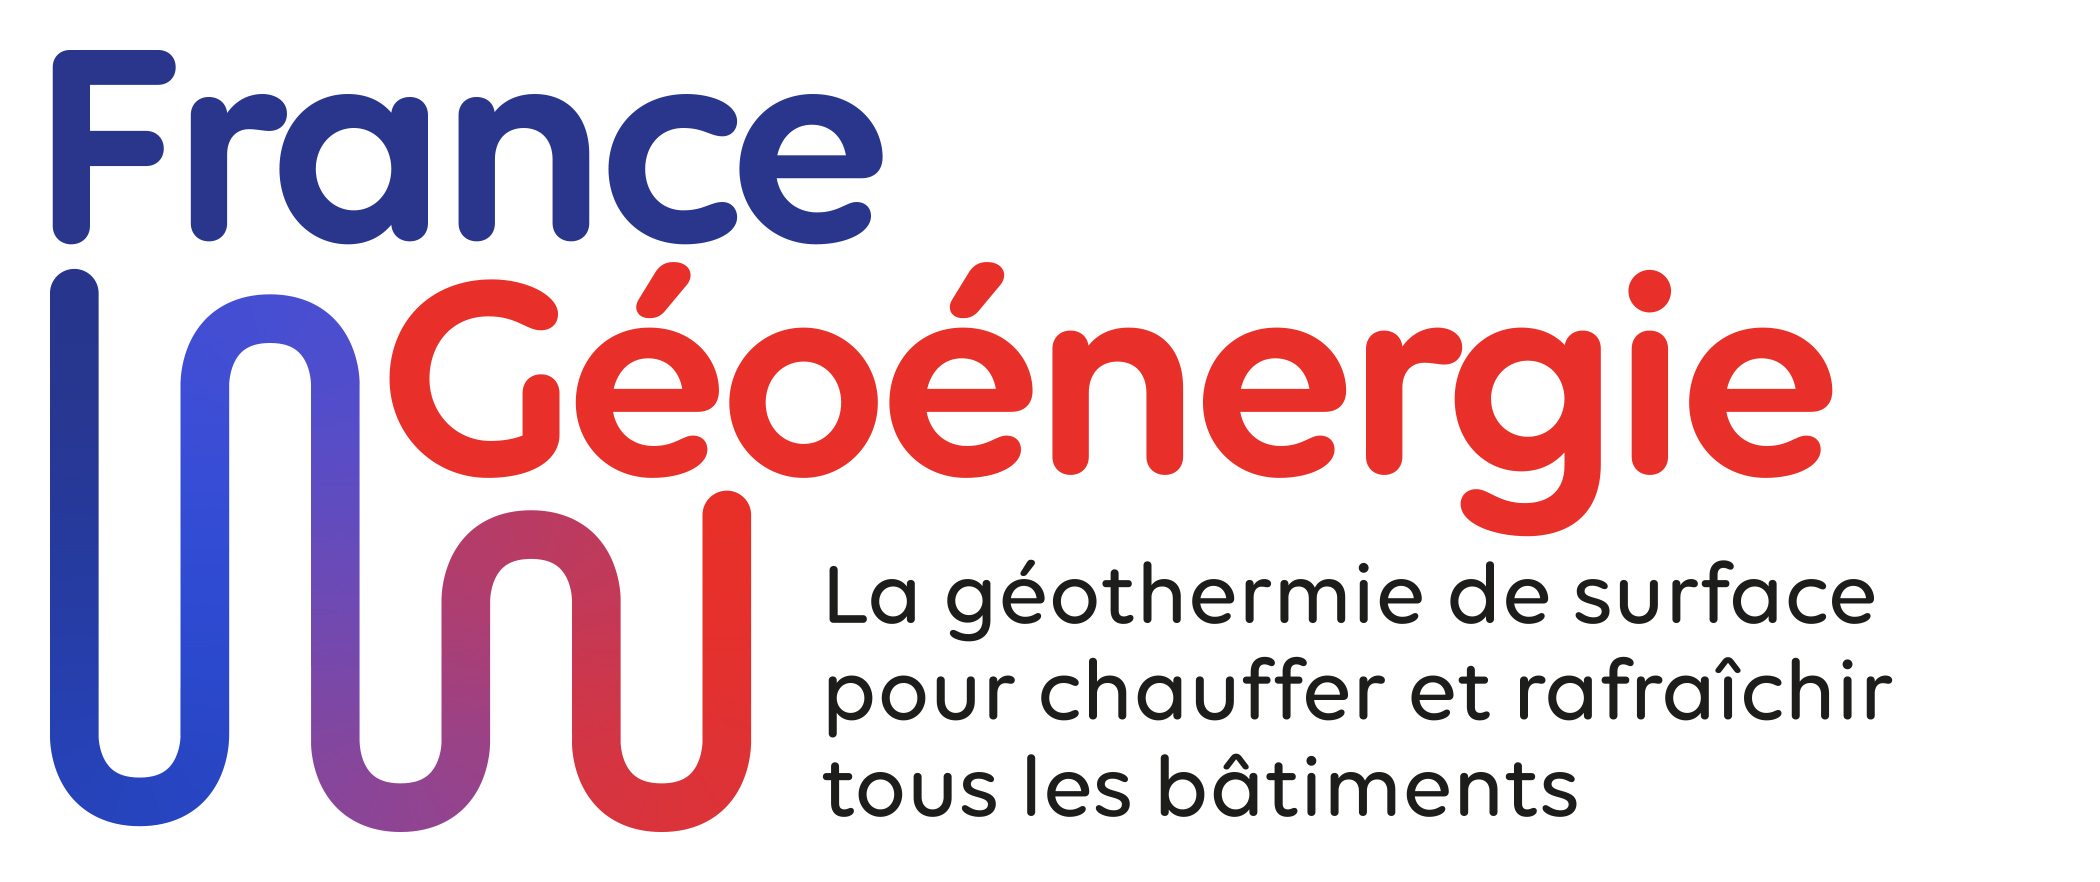 logo ©France Géoénergie